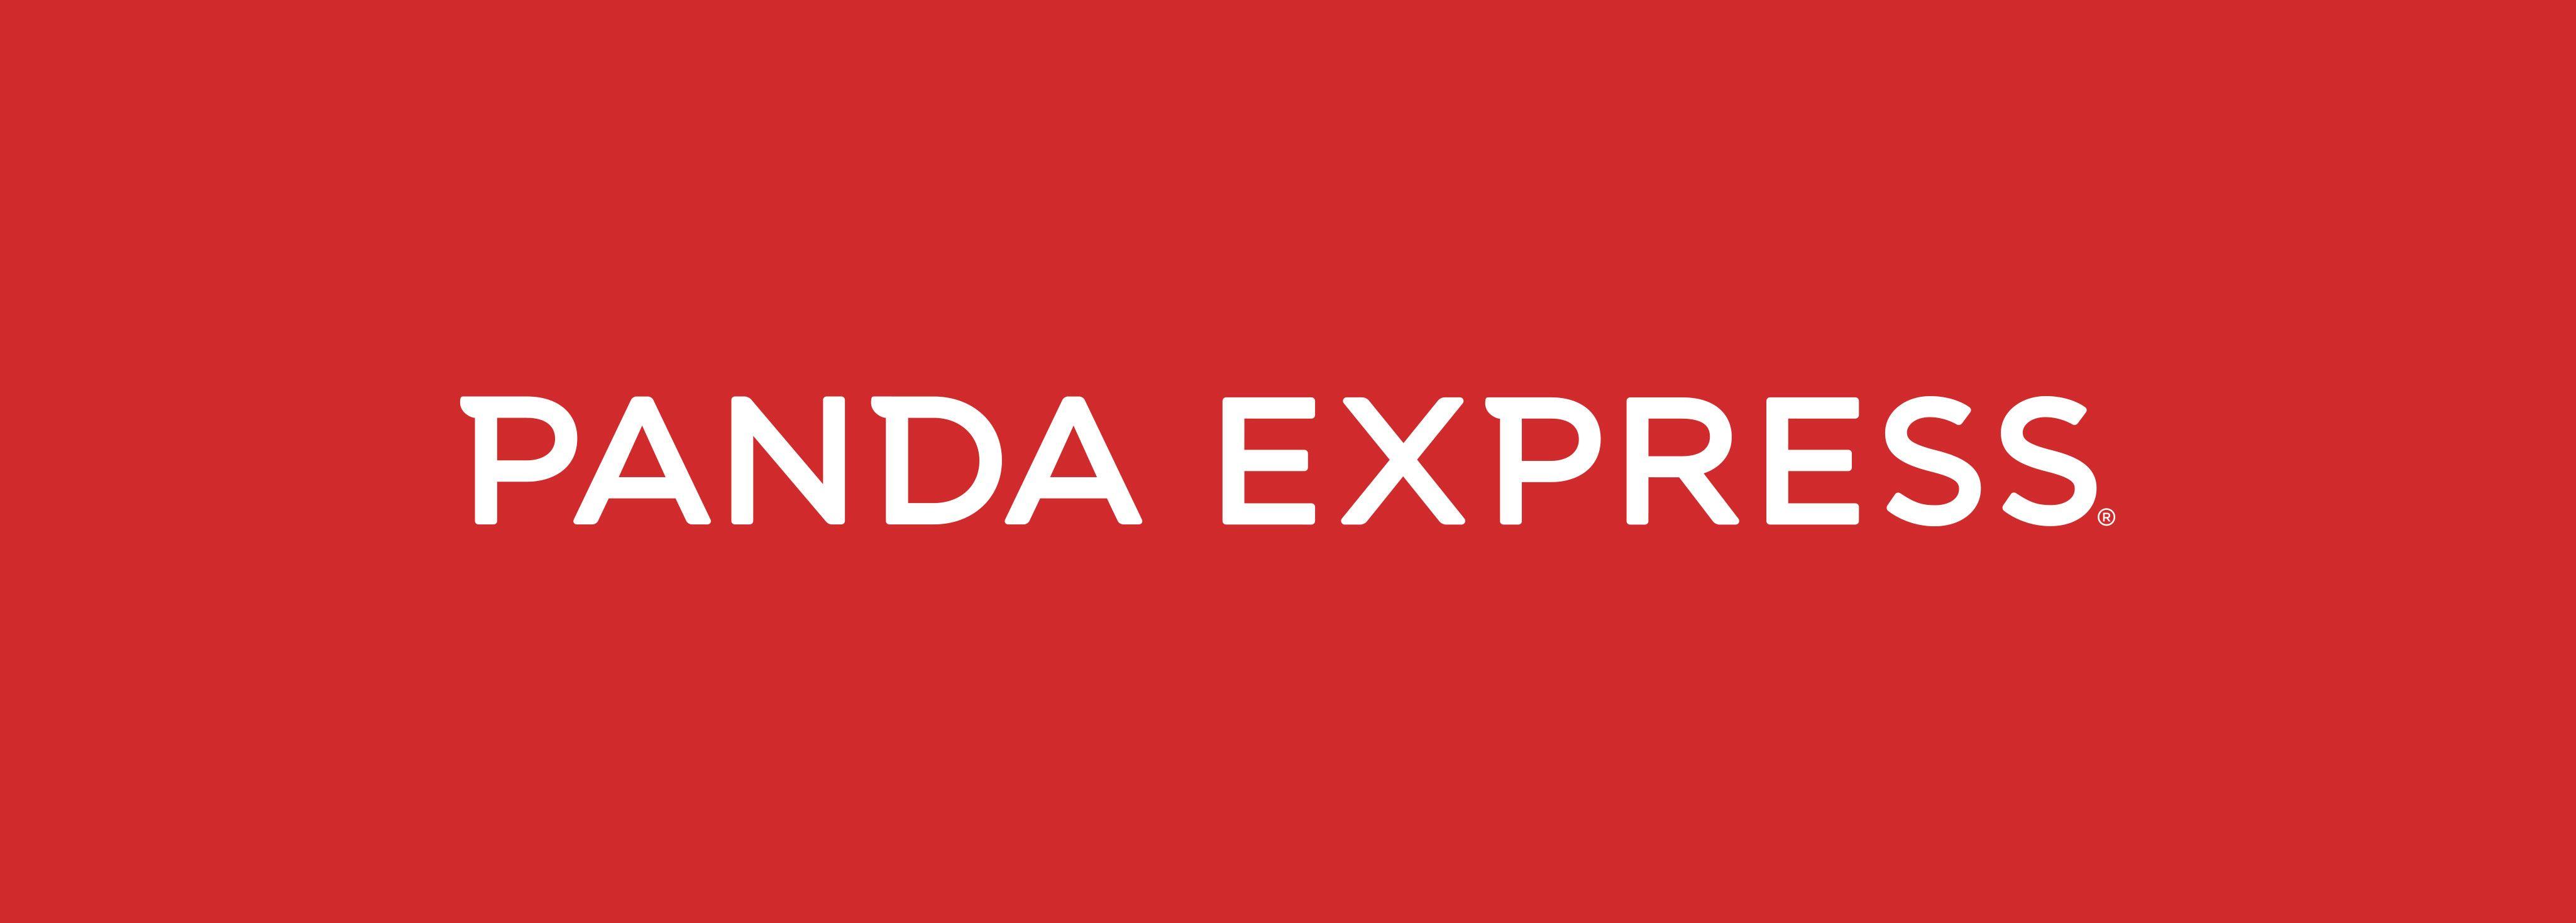 Panda Express Logo - Panda Express - Studio MPLS | A Branding & Packaging Design Agency ...